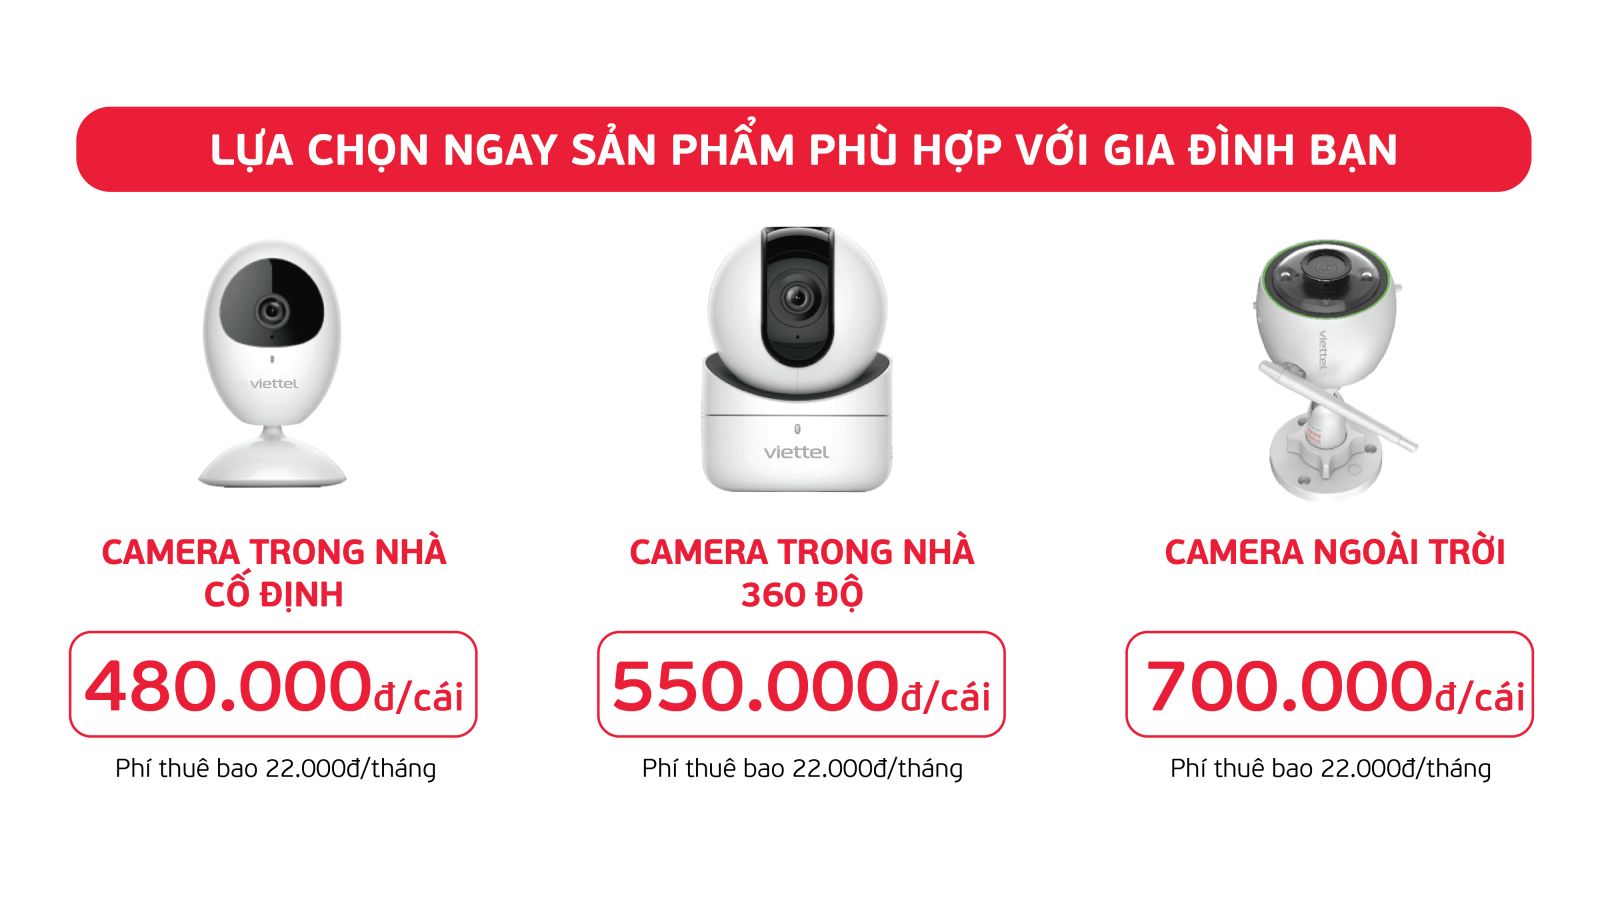 Camera Viettel Nam Định